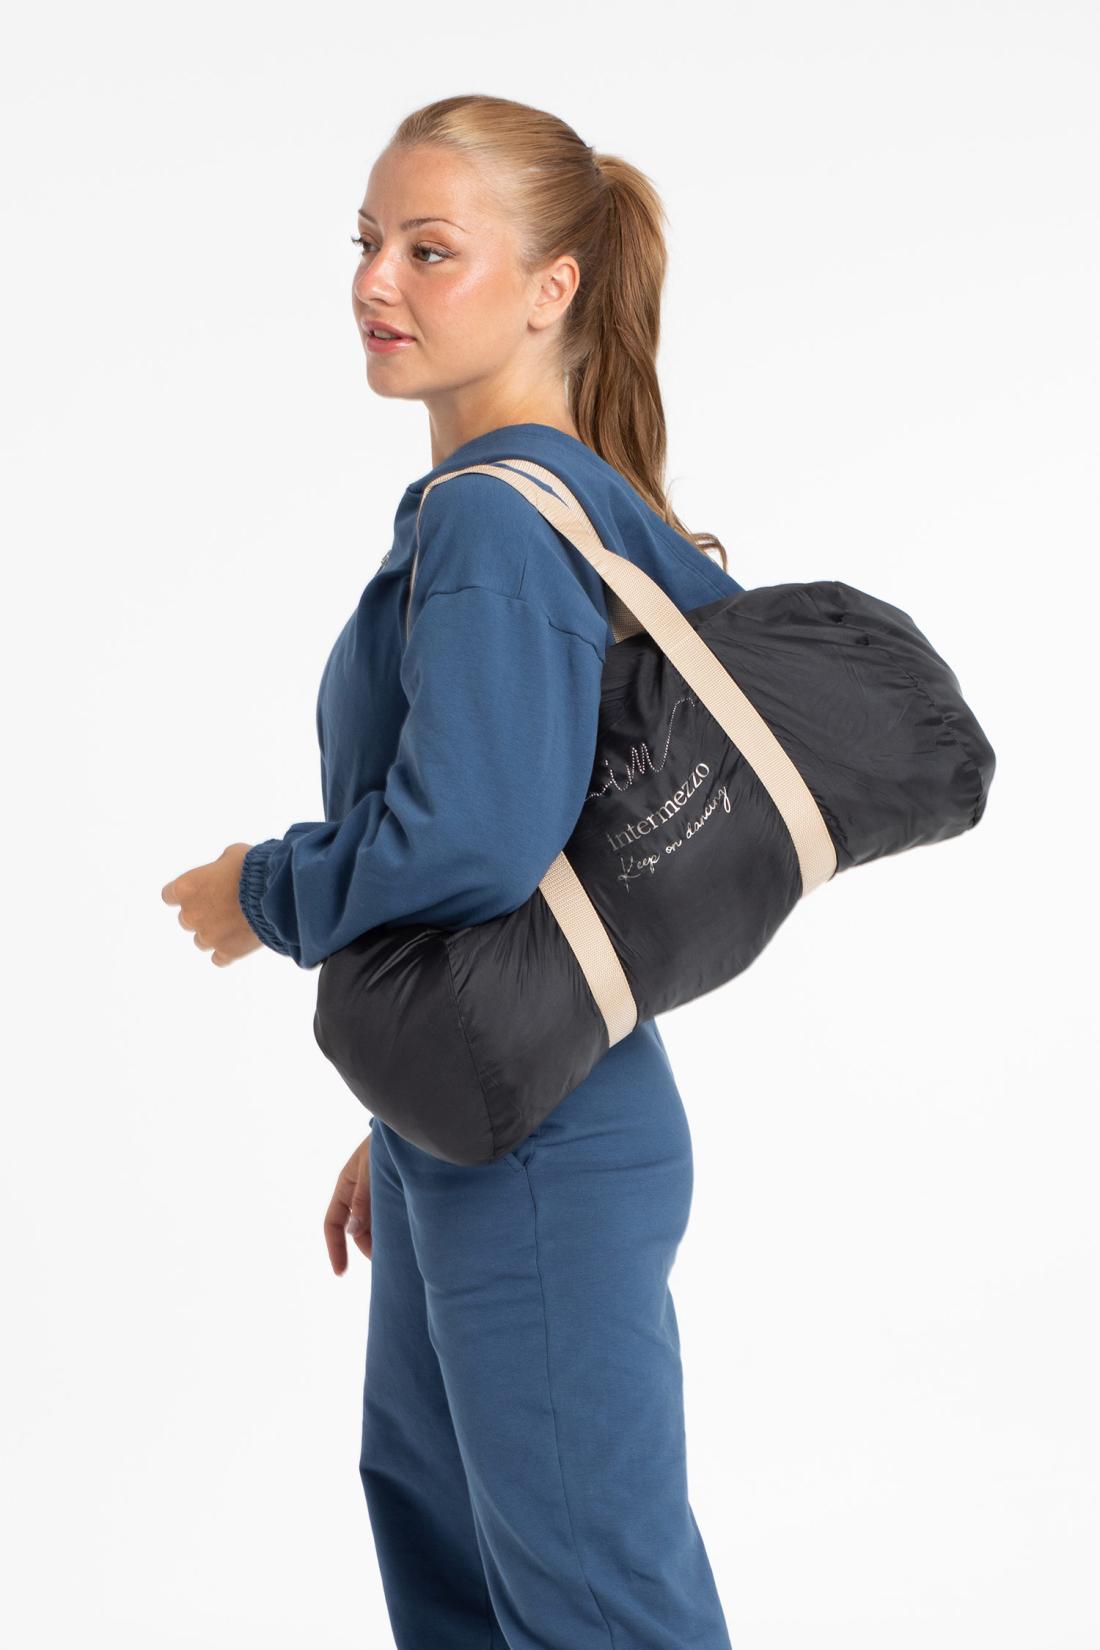 Perspiration fabric Bag with inside pocket and shiny logo Intermezzo dance ballet